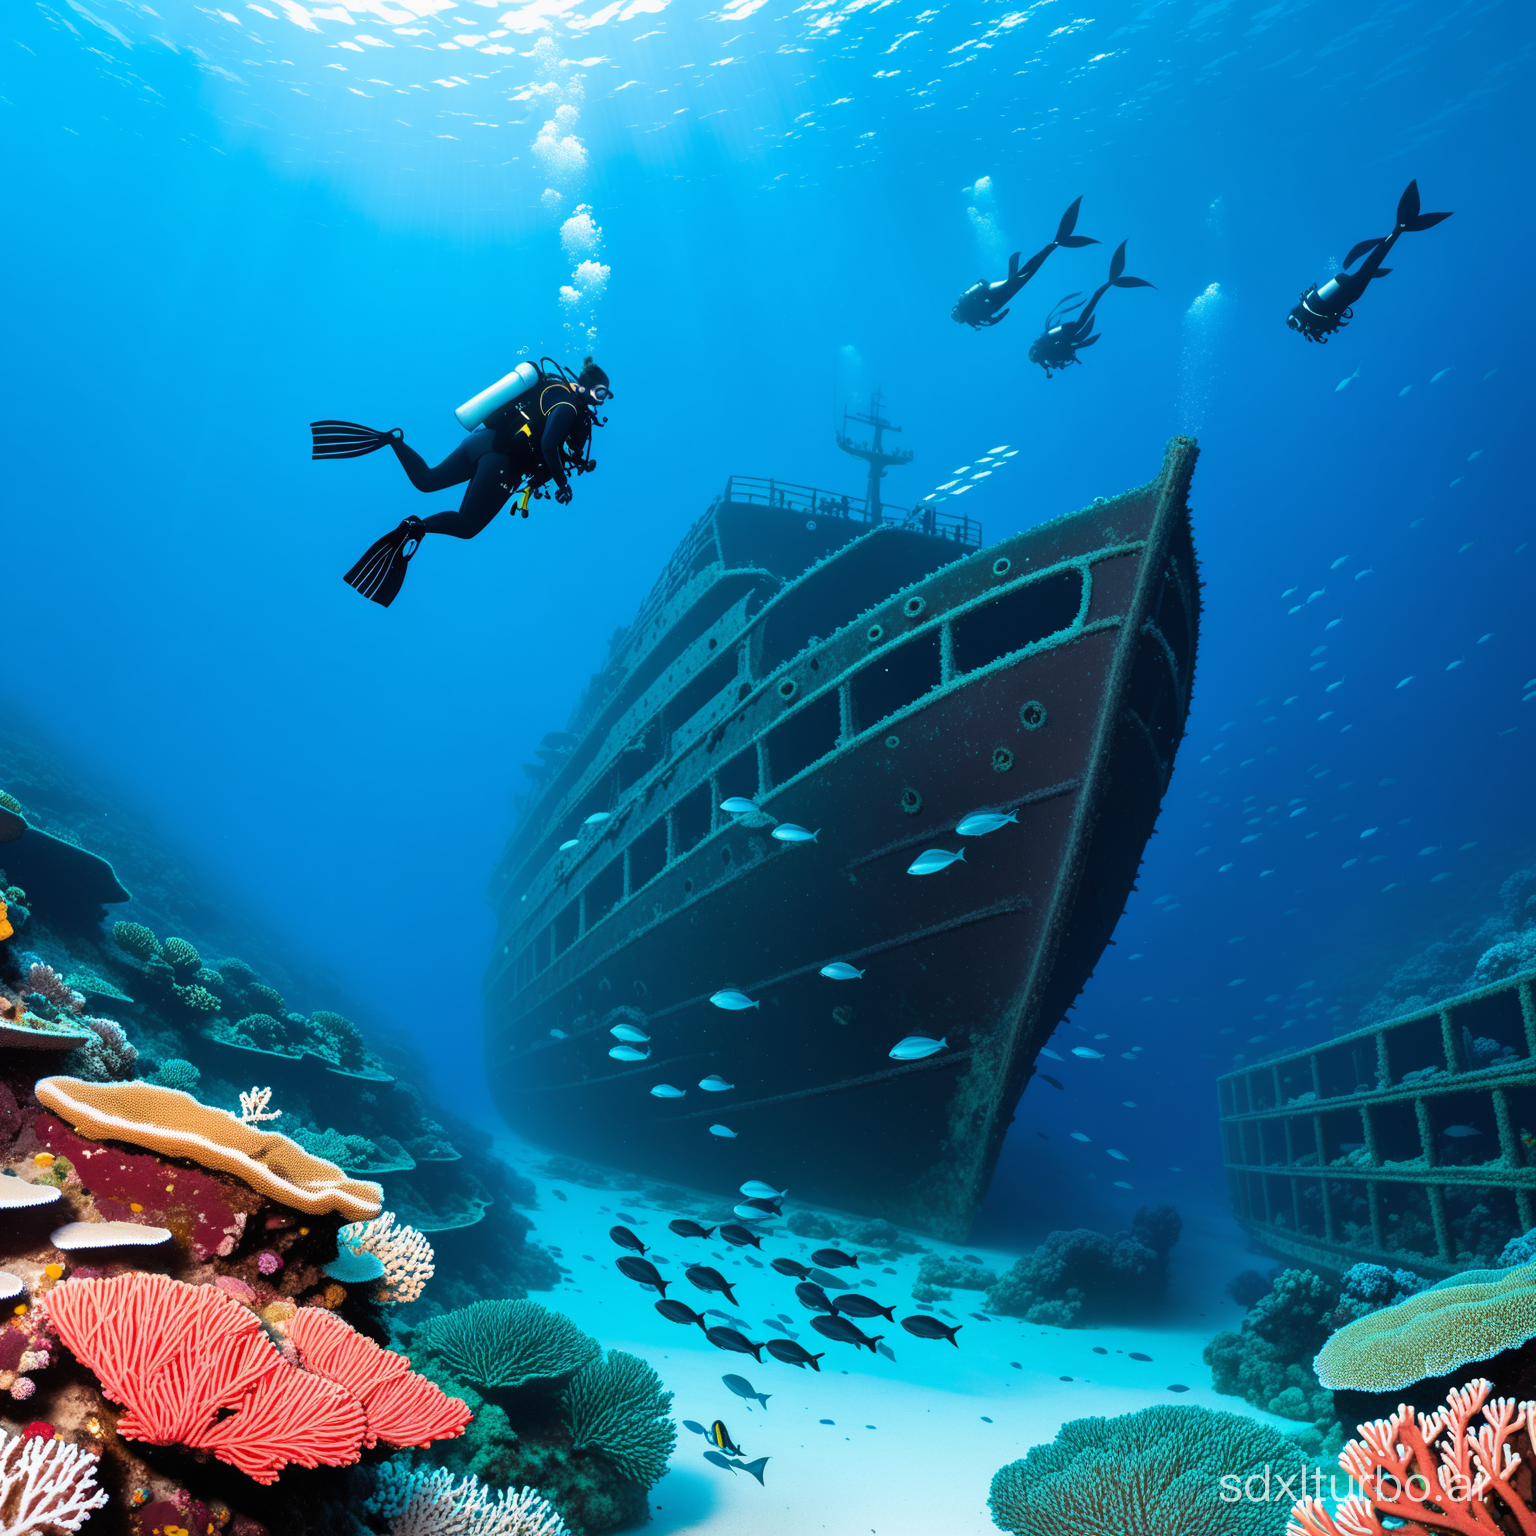 Deep sea, coral, a sunken ship, divers, fish